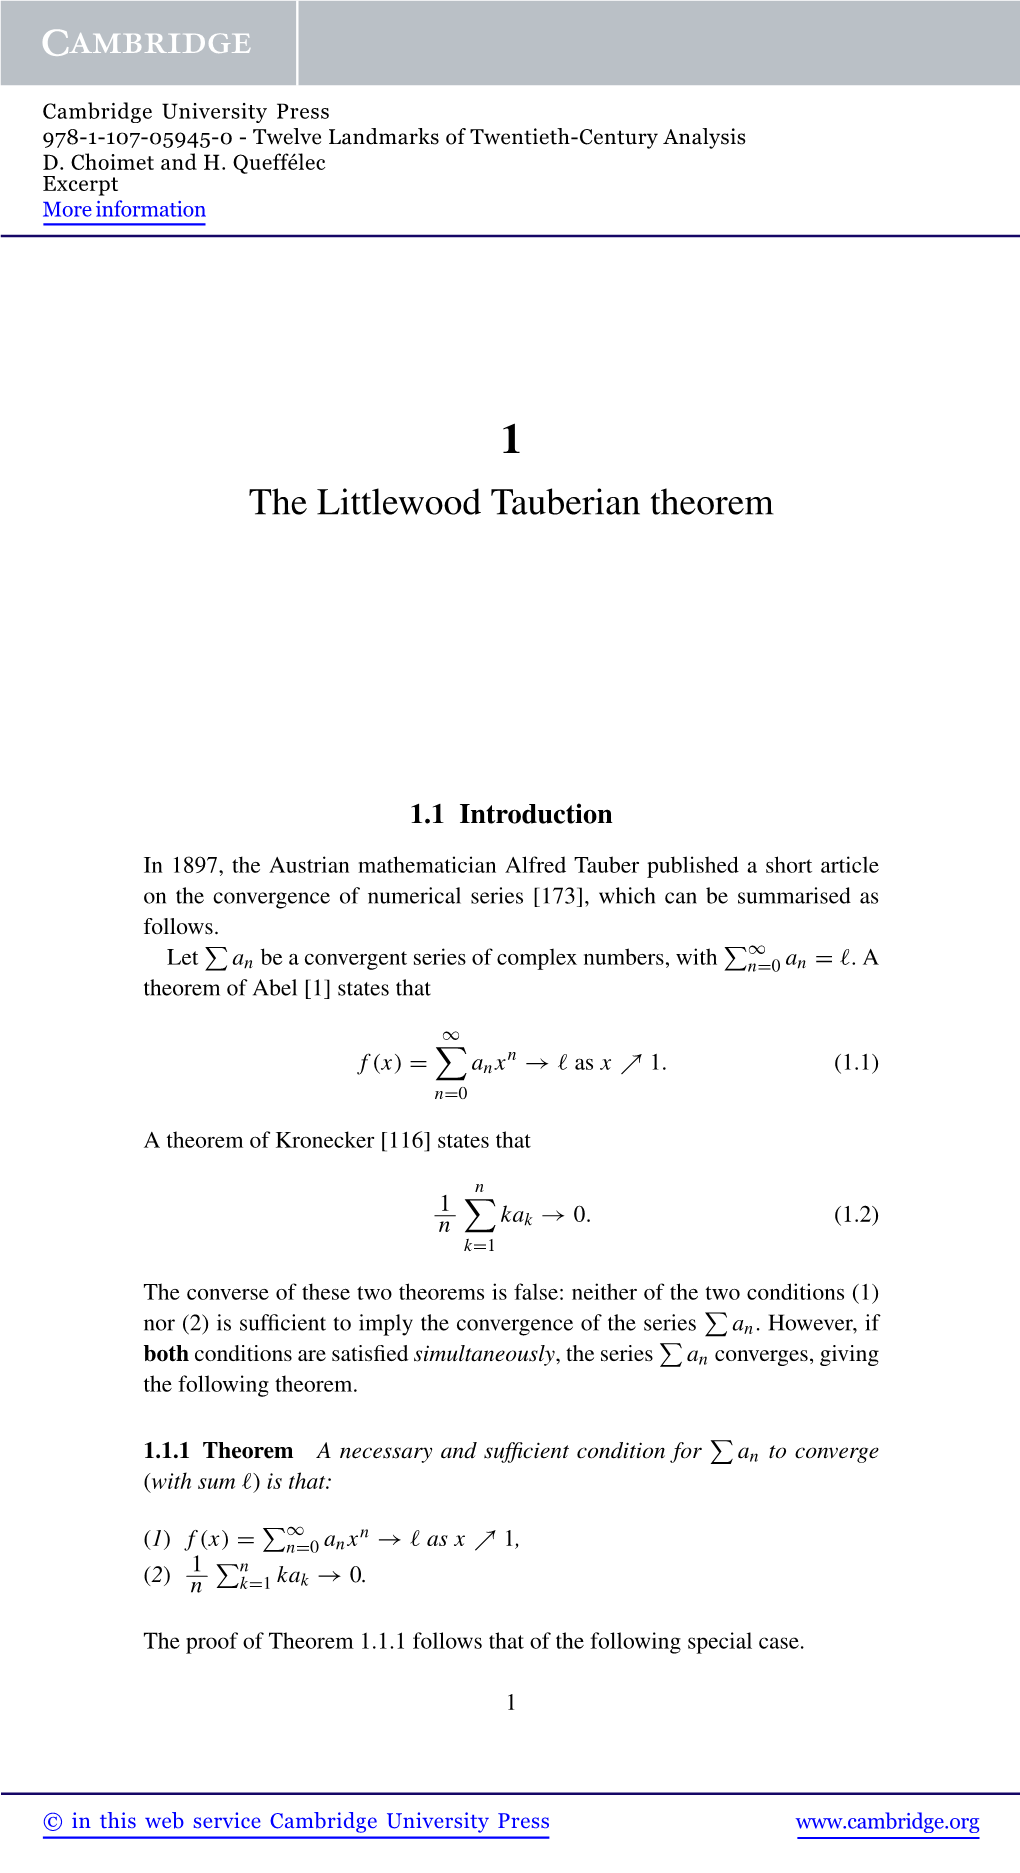 The Littlewood Tauberian Theorem